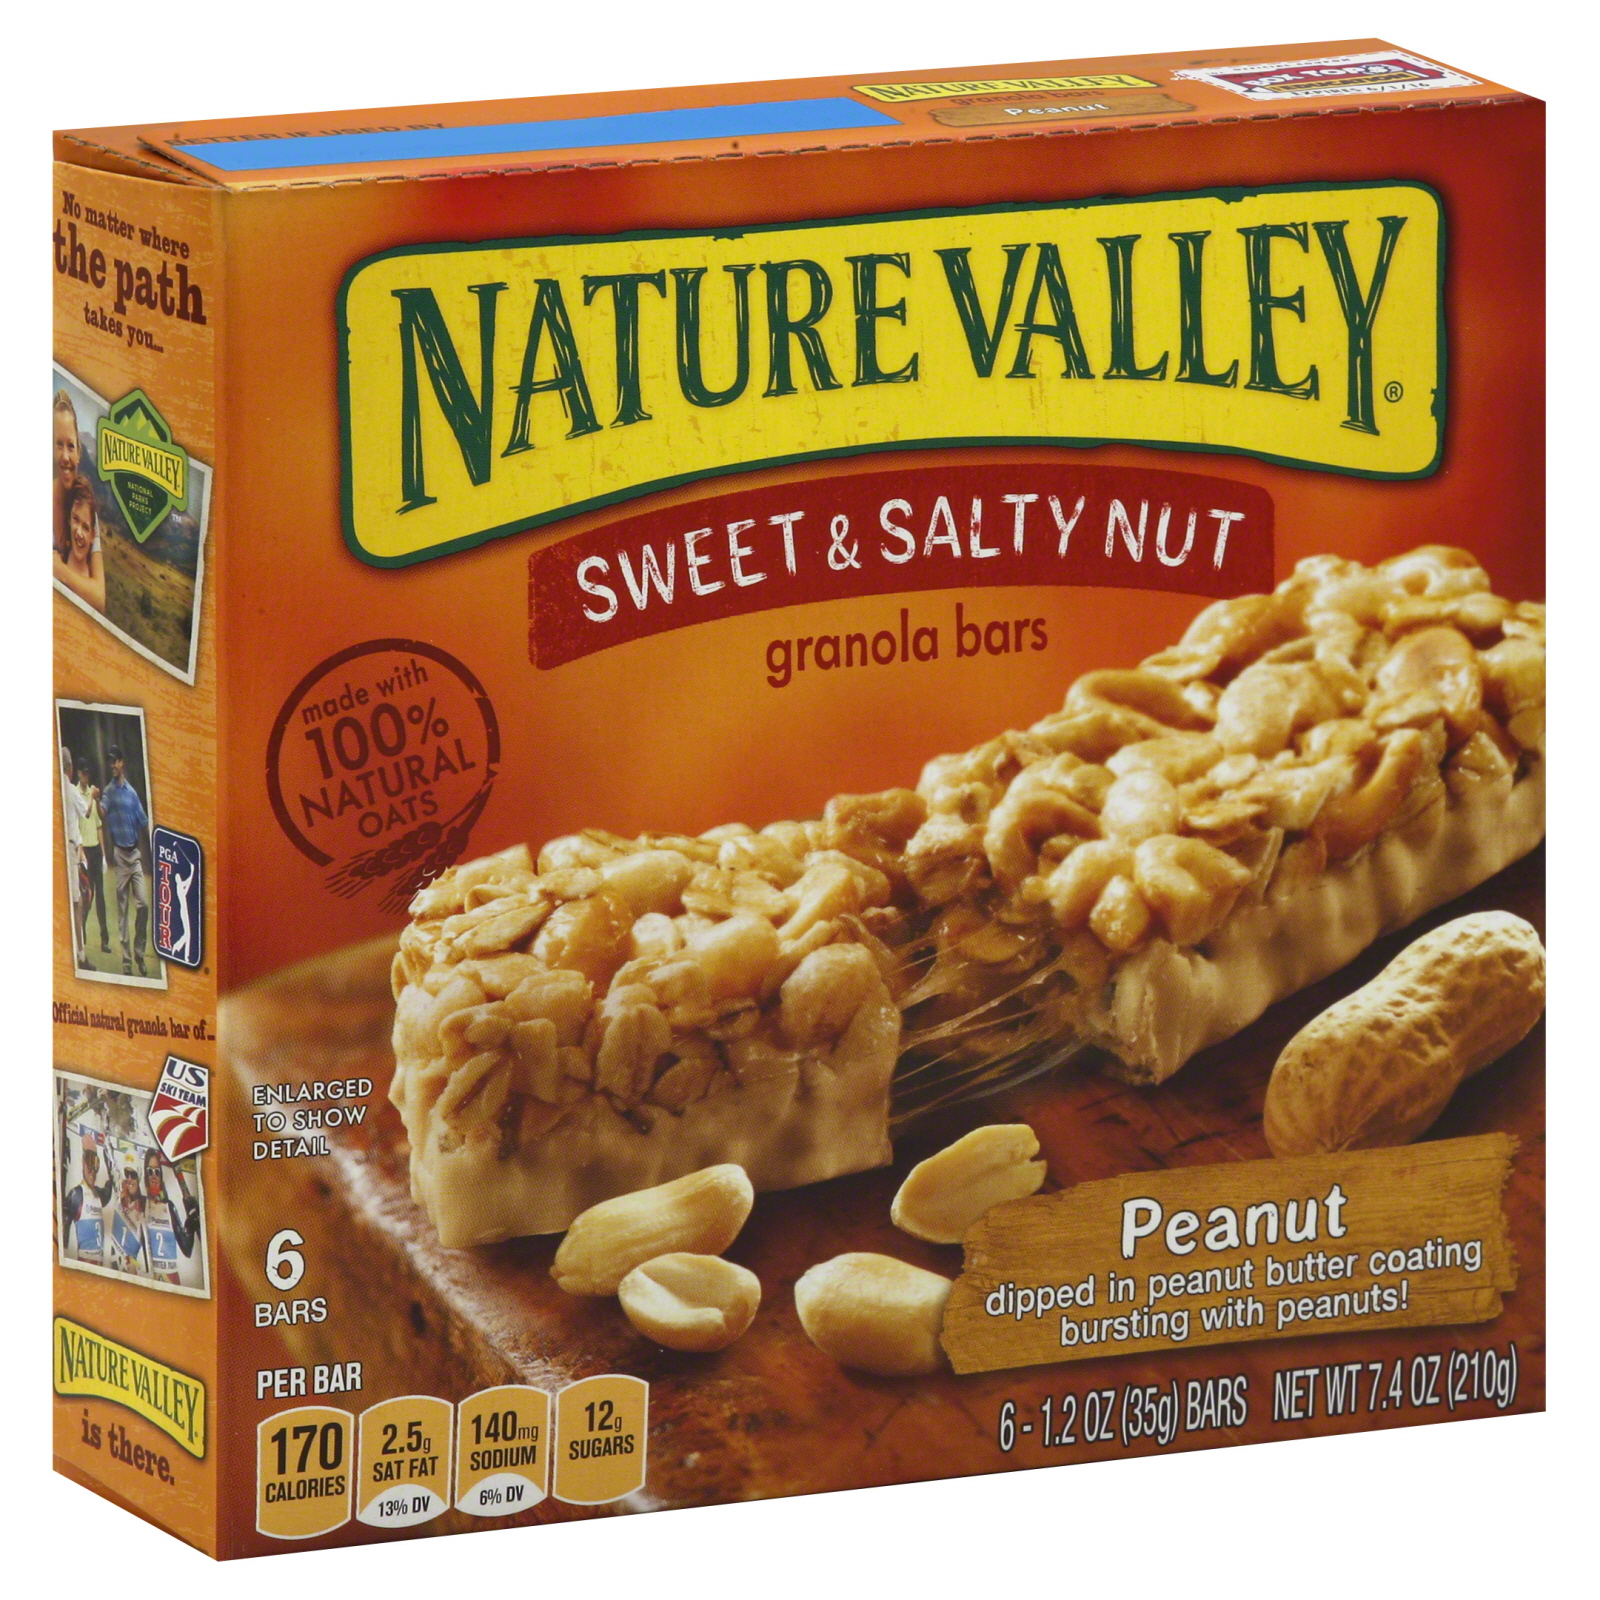 Nature Valley Sweet & Salty Nut Granola Bars, Peanut 6 - 1.2 oz (35 g) bars [7.4 oz (210 g)]